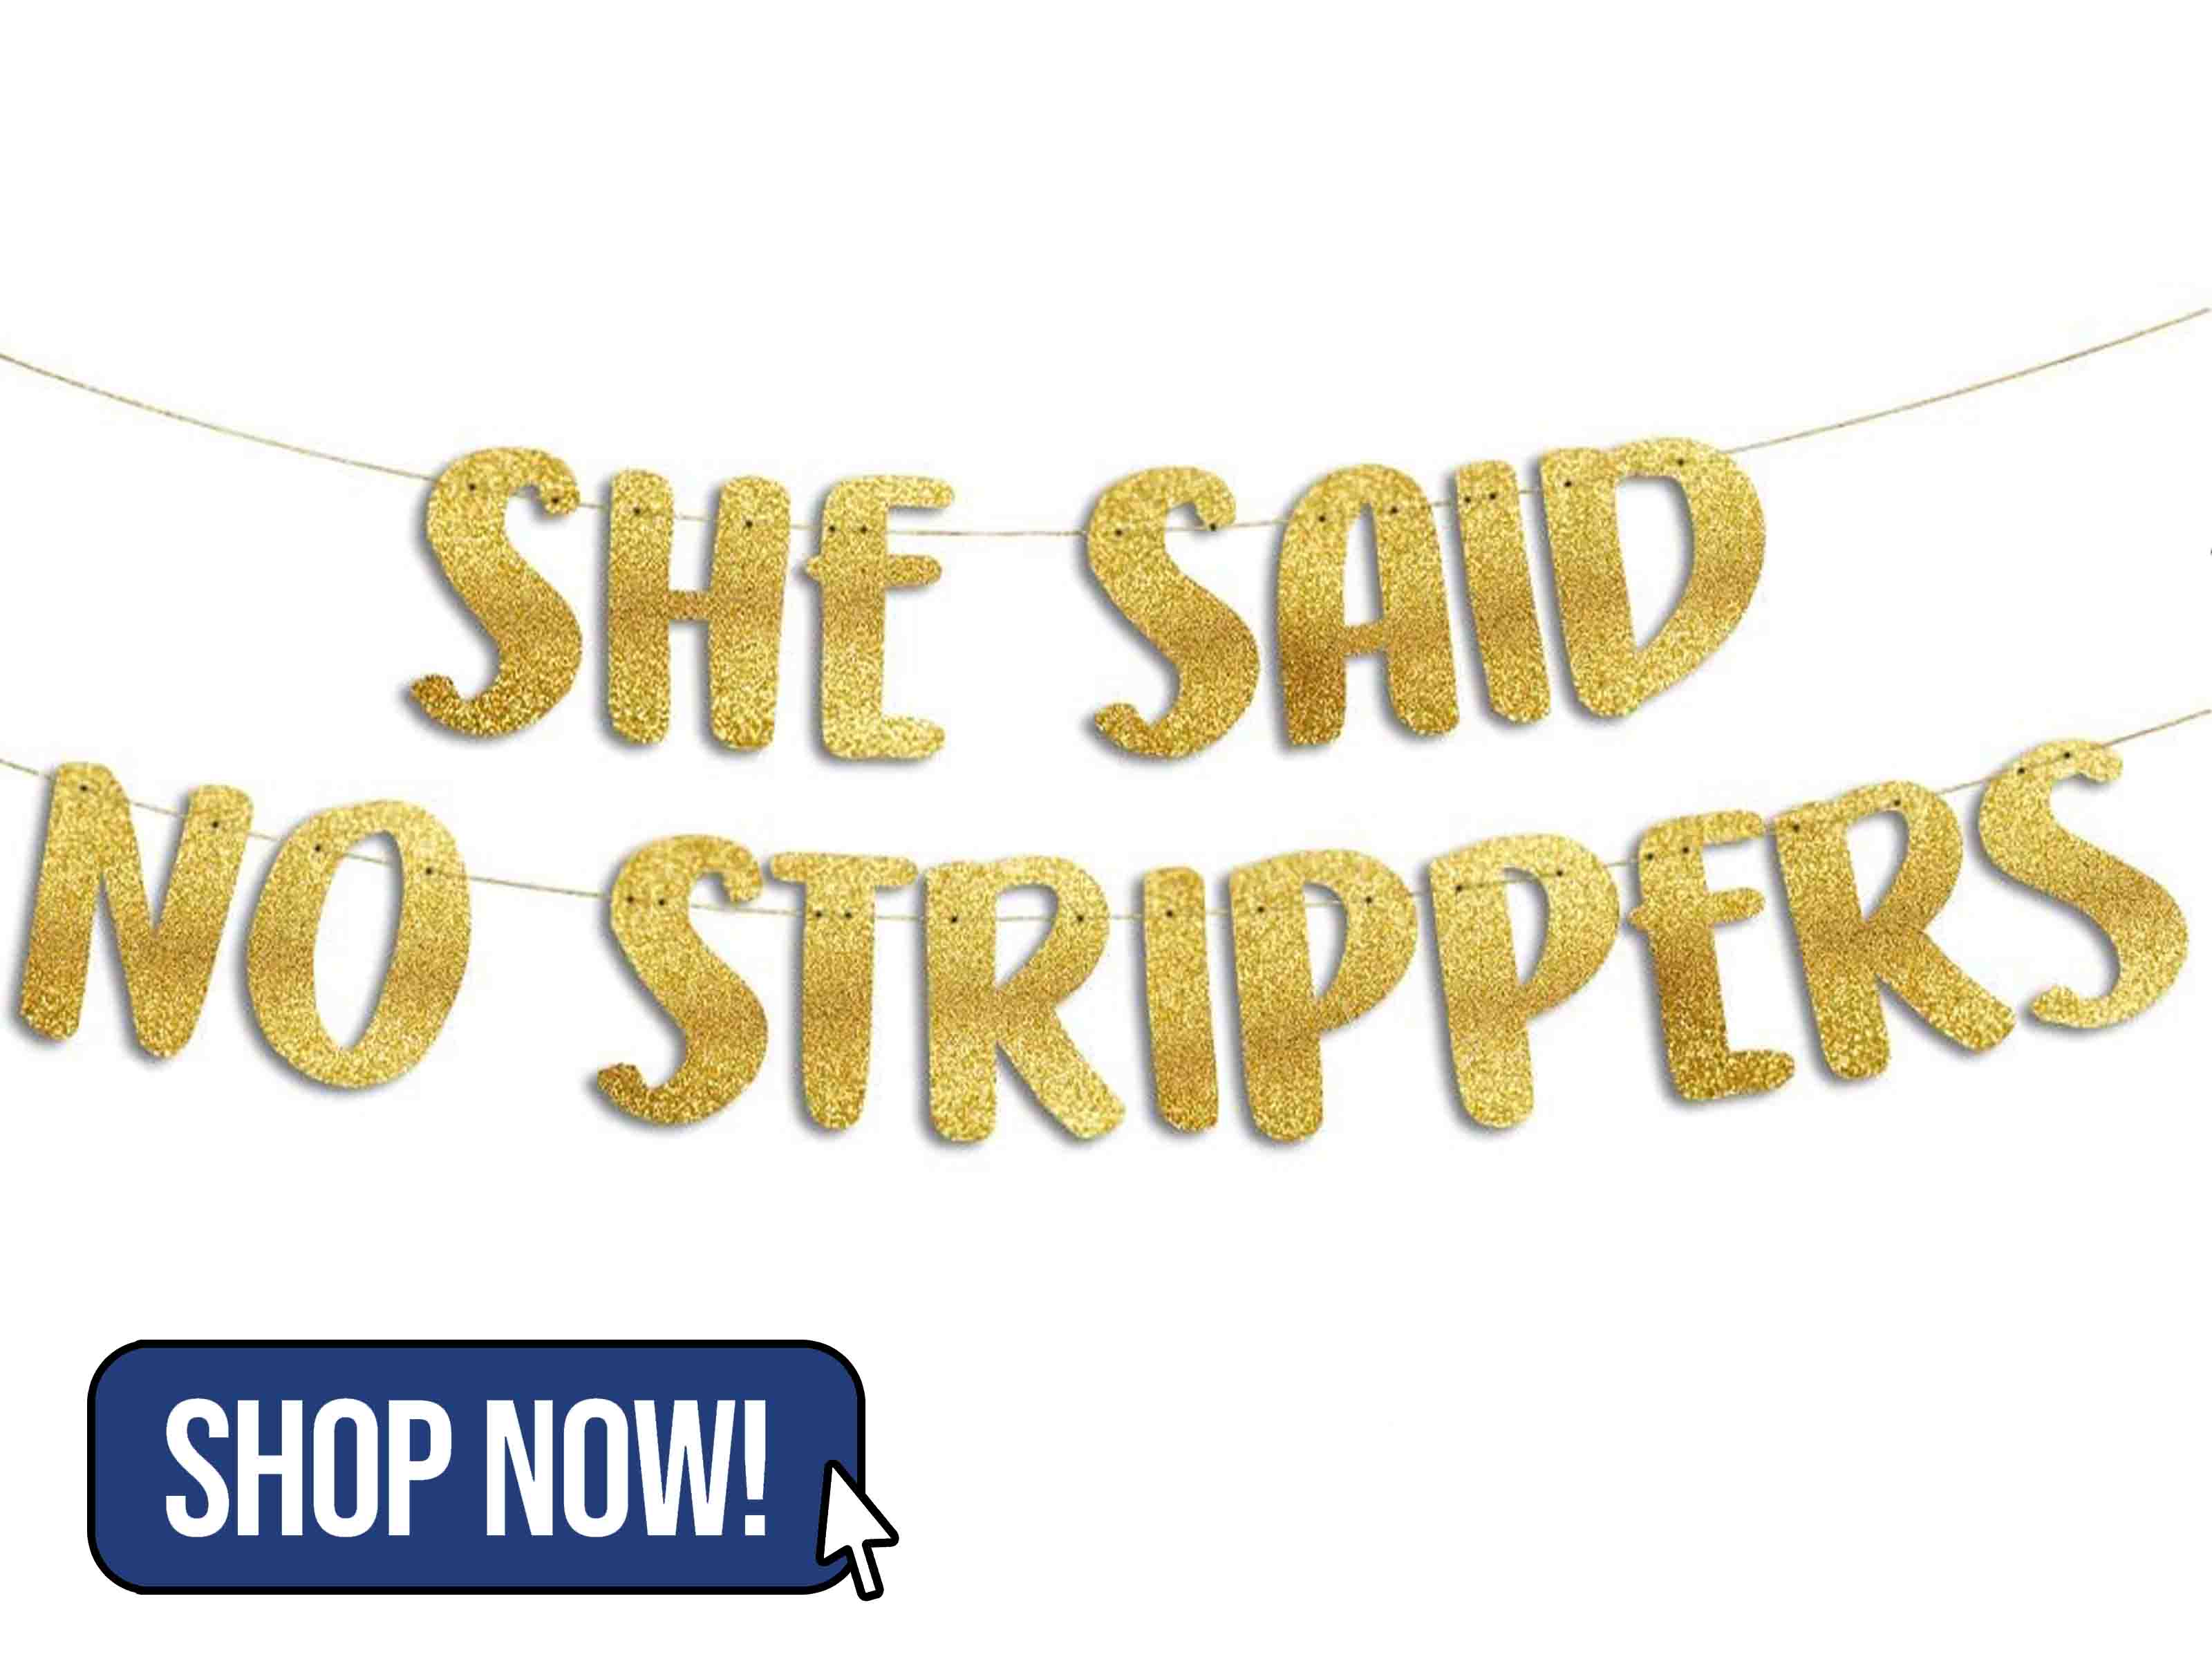 She Said No Strippers - Amazon